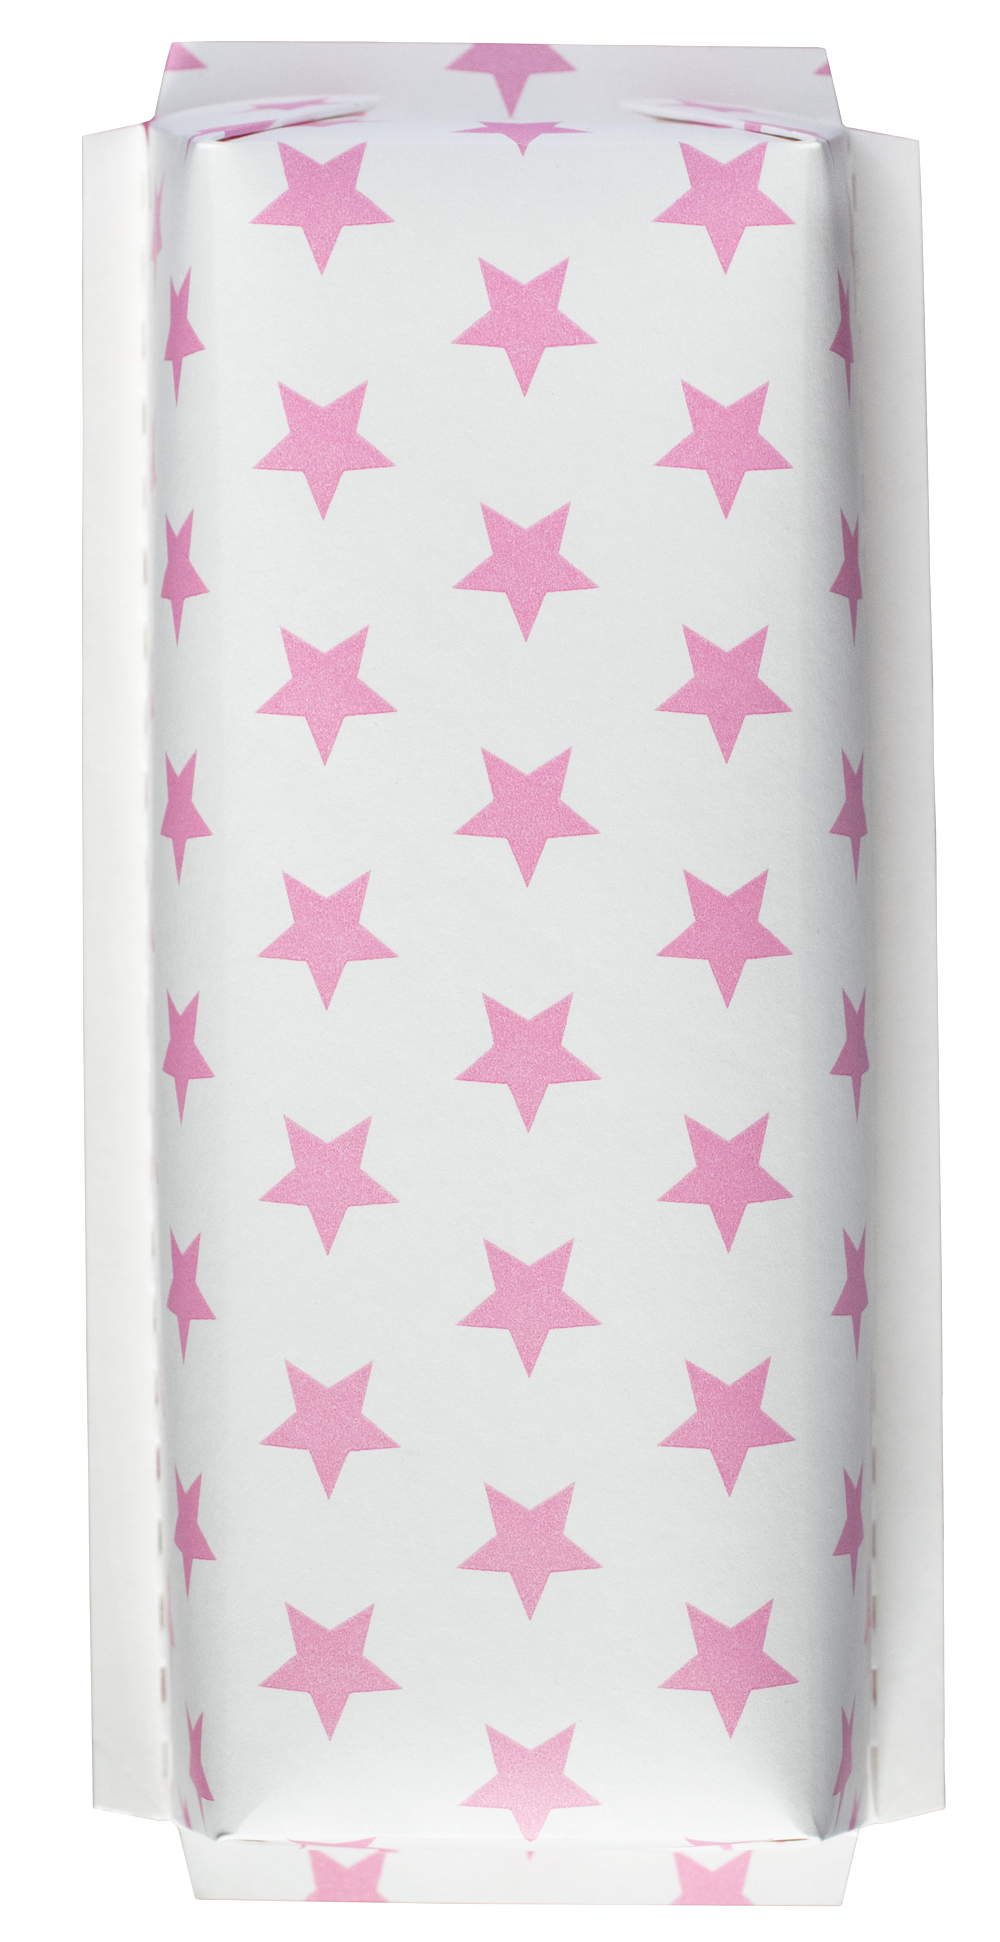 XXL-Backform Sterne rosé auf weiß, aufgestellt • 20 x 7 x 5,5 cm